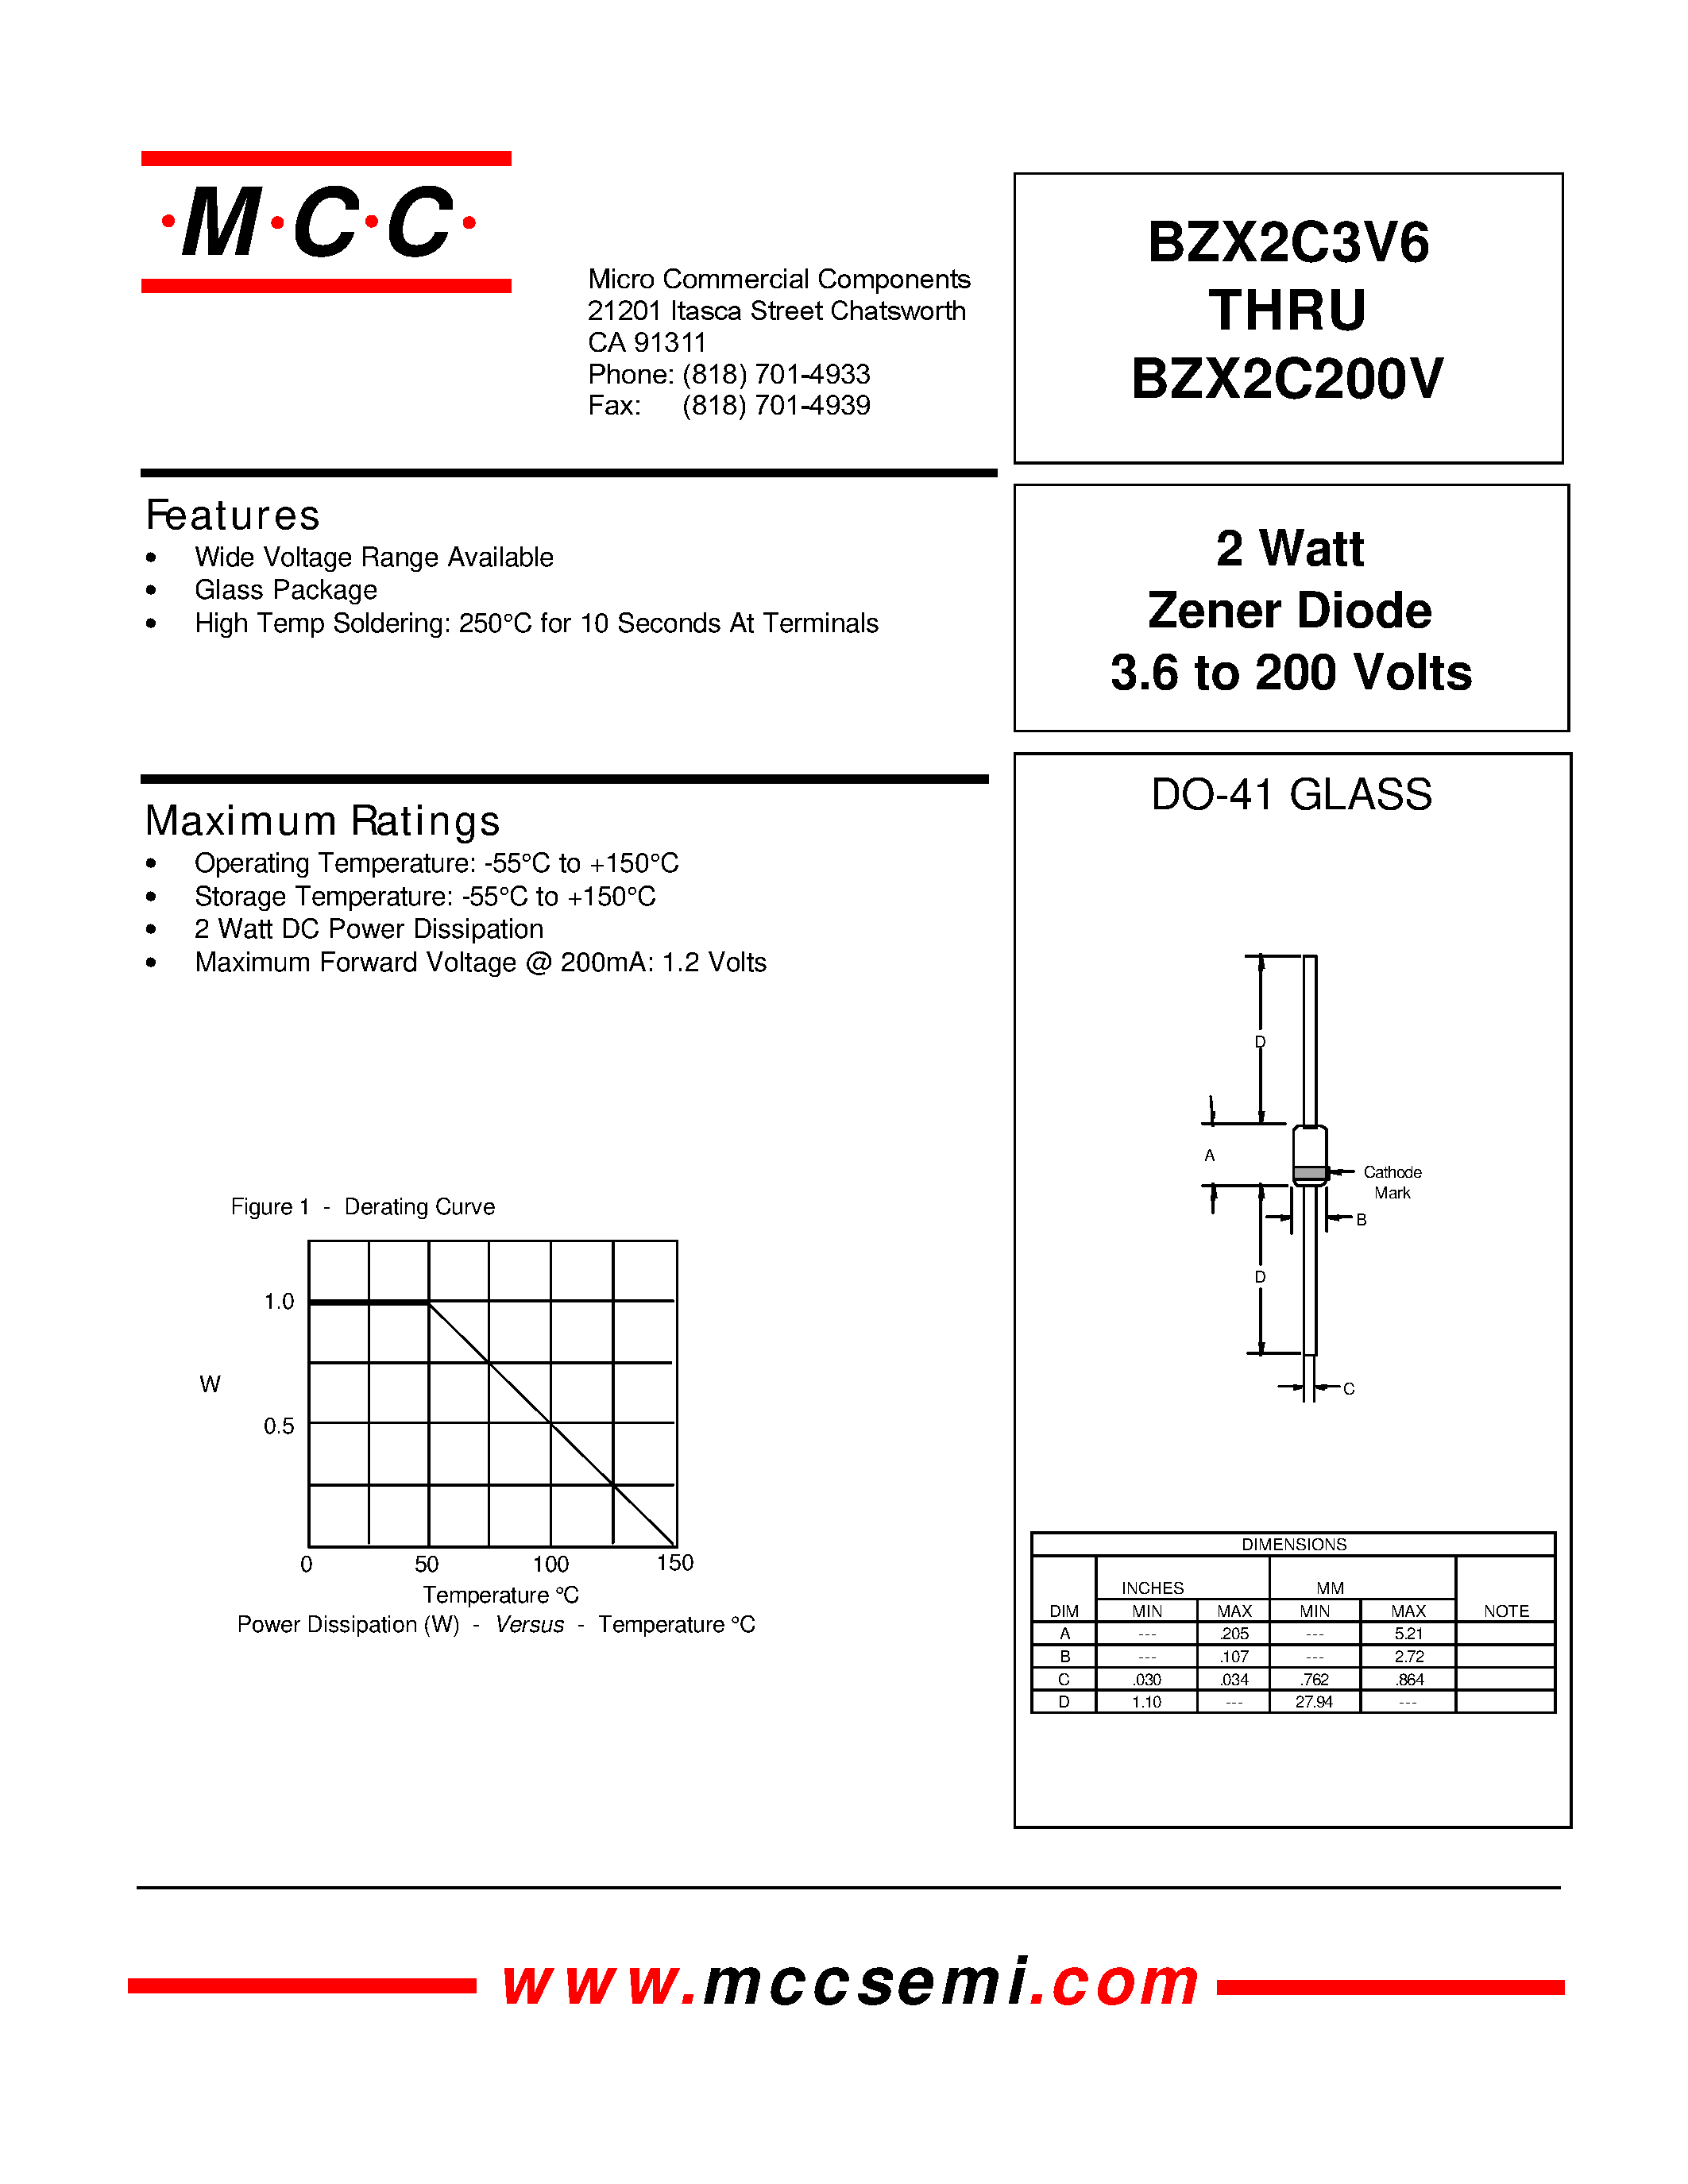 Datasheet BZX2C39V - 2 Watt Zener Diode 3.6 to 200 Volts page 1